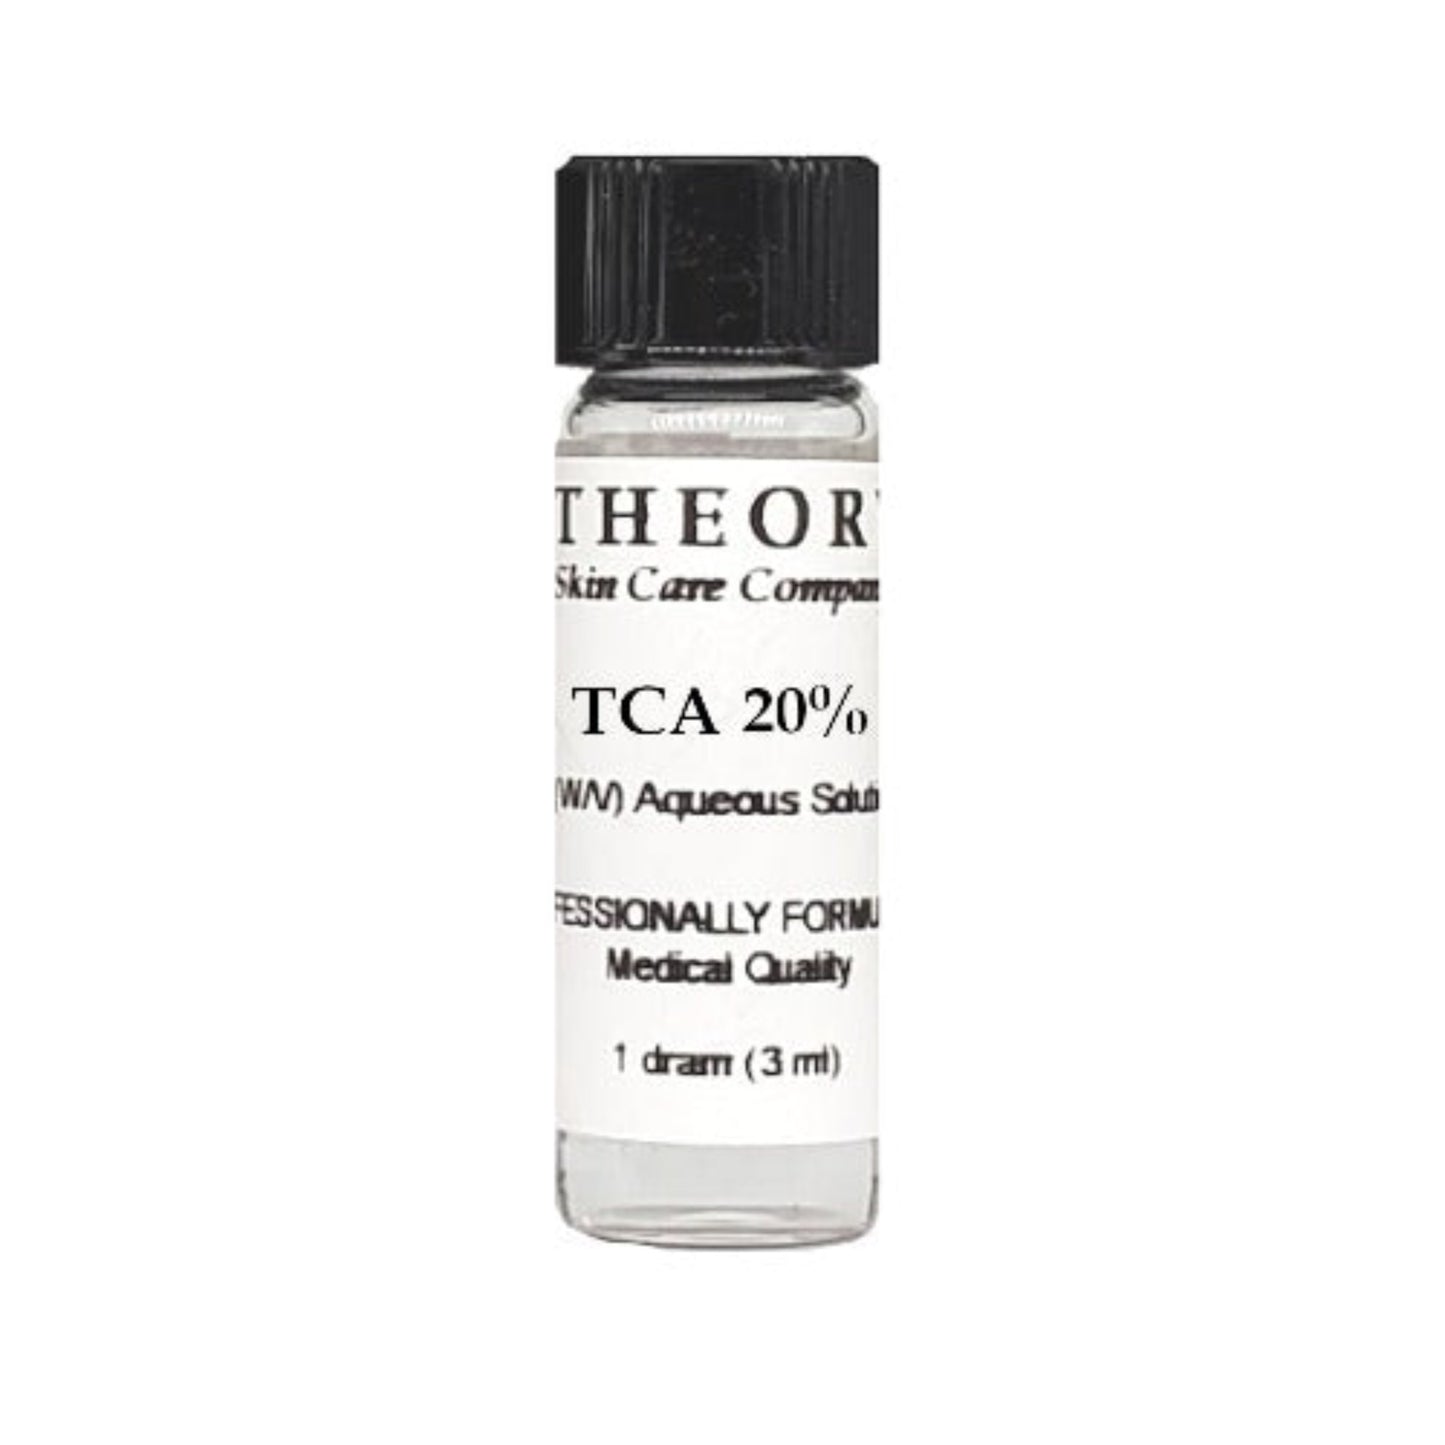 20% TCA, Trichloroacetic Acid | At Home Chemical Peel